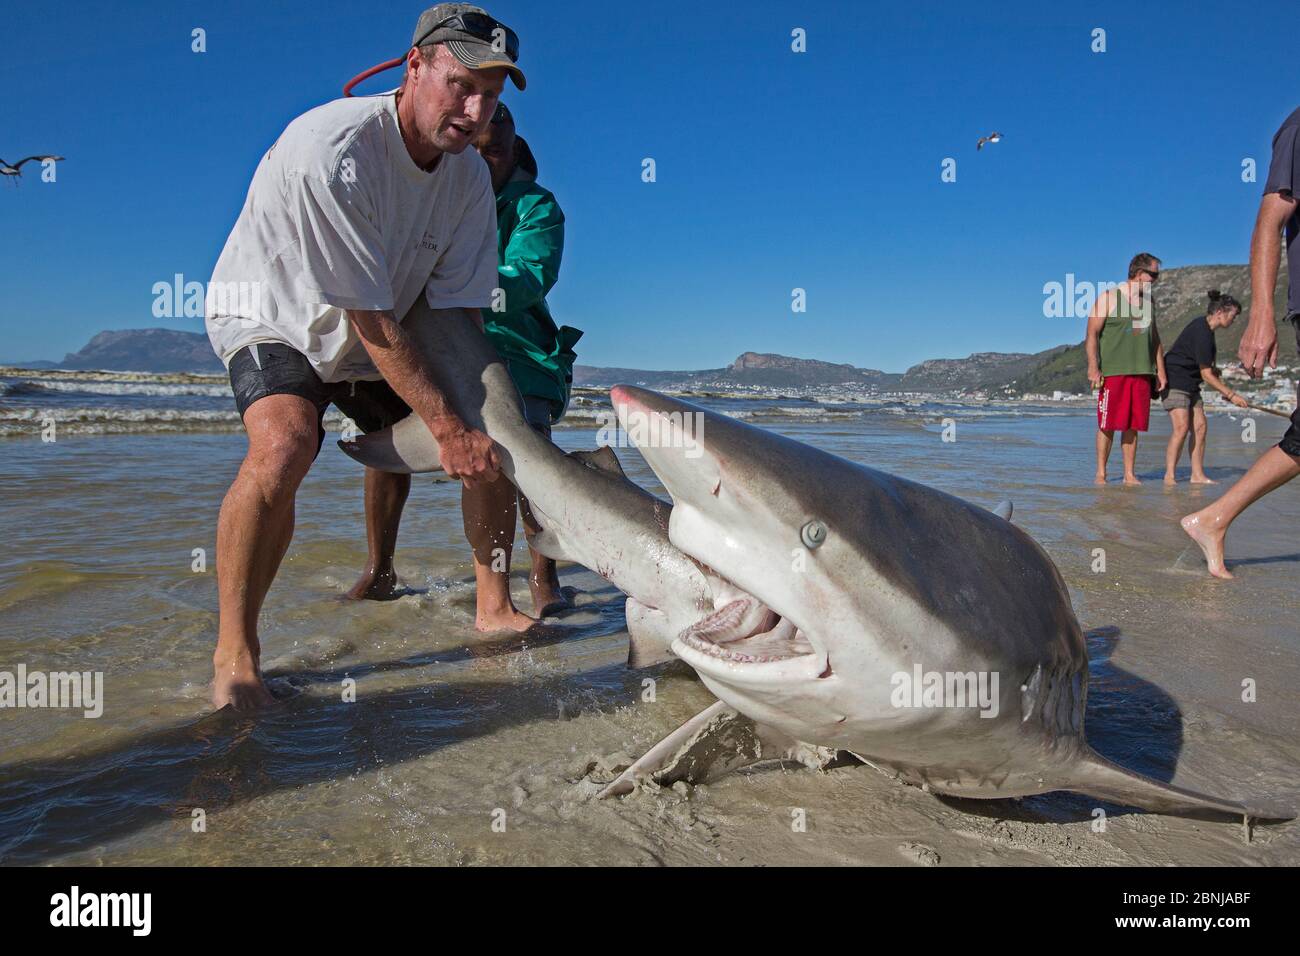 Bronze whaler shark (Carcharhinus brachyurus), catturati nelle tradizionali seine net e rilasciato dal pescatore, Muizenberg Beach, Città del Capo, Sud Africa, J Foto Stock